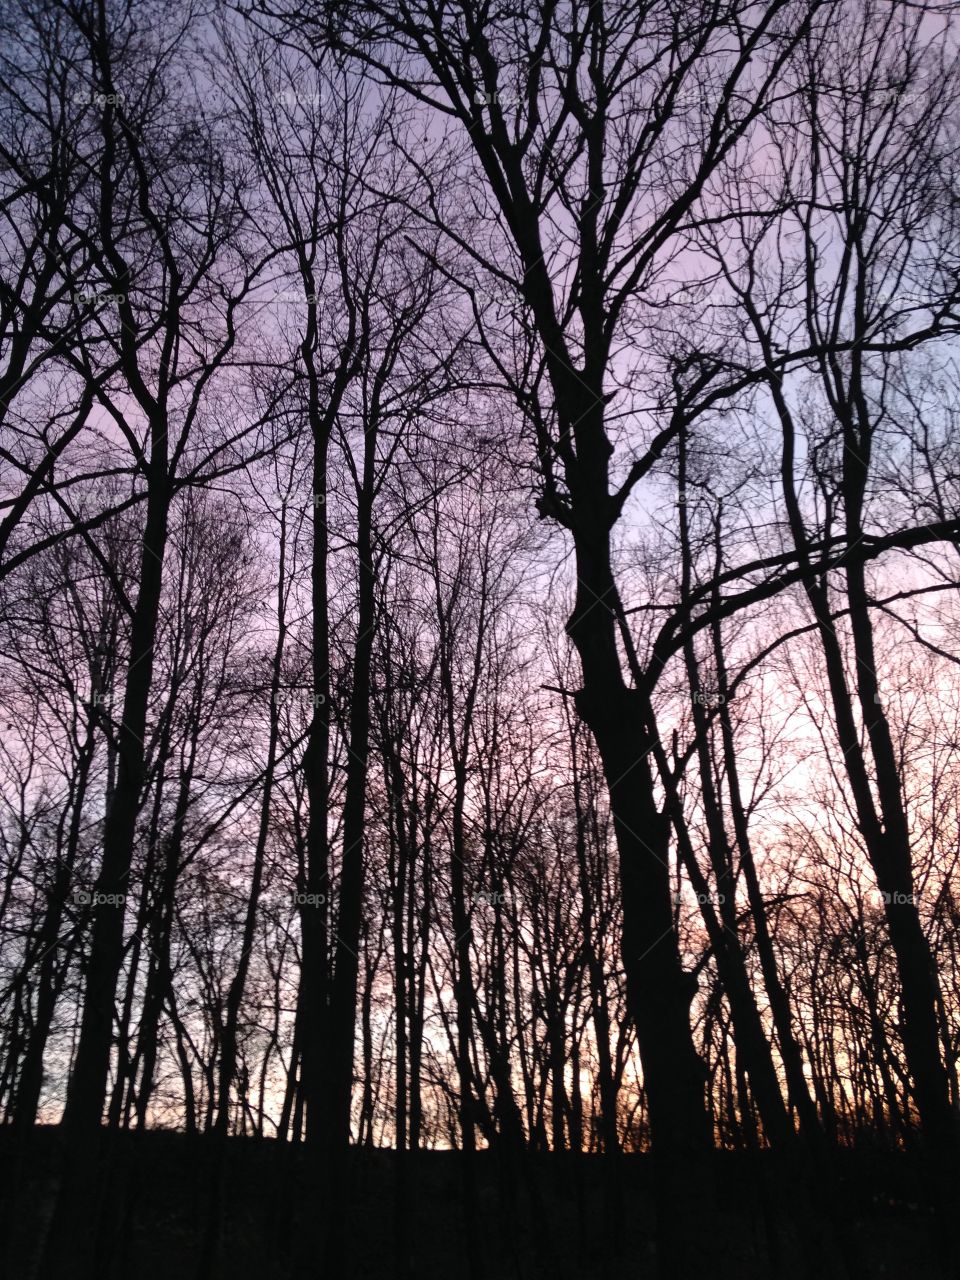 Morning trees